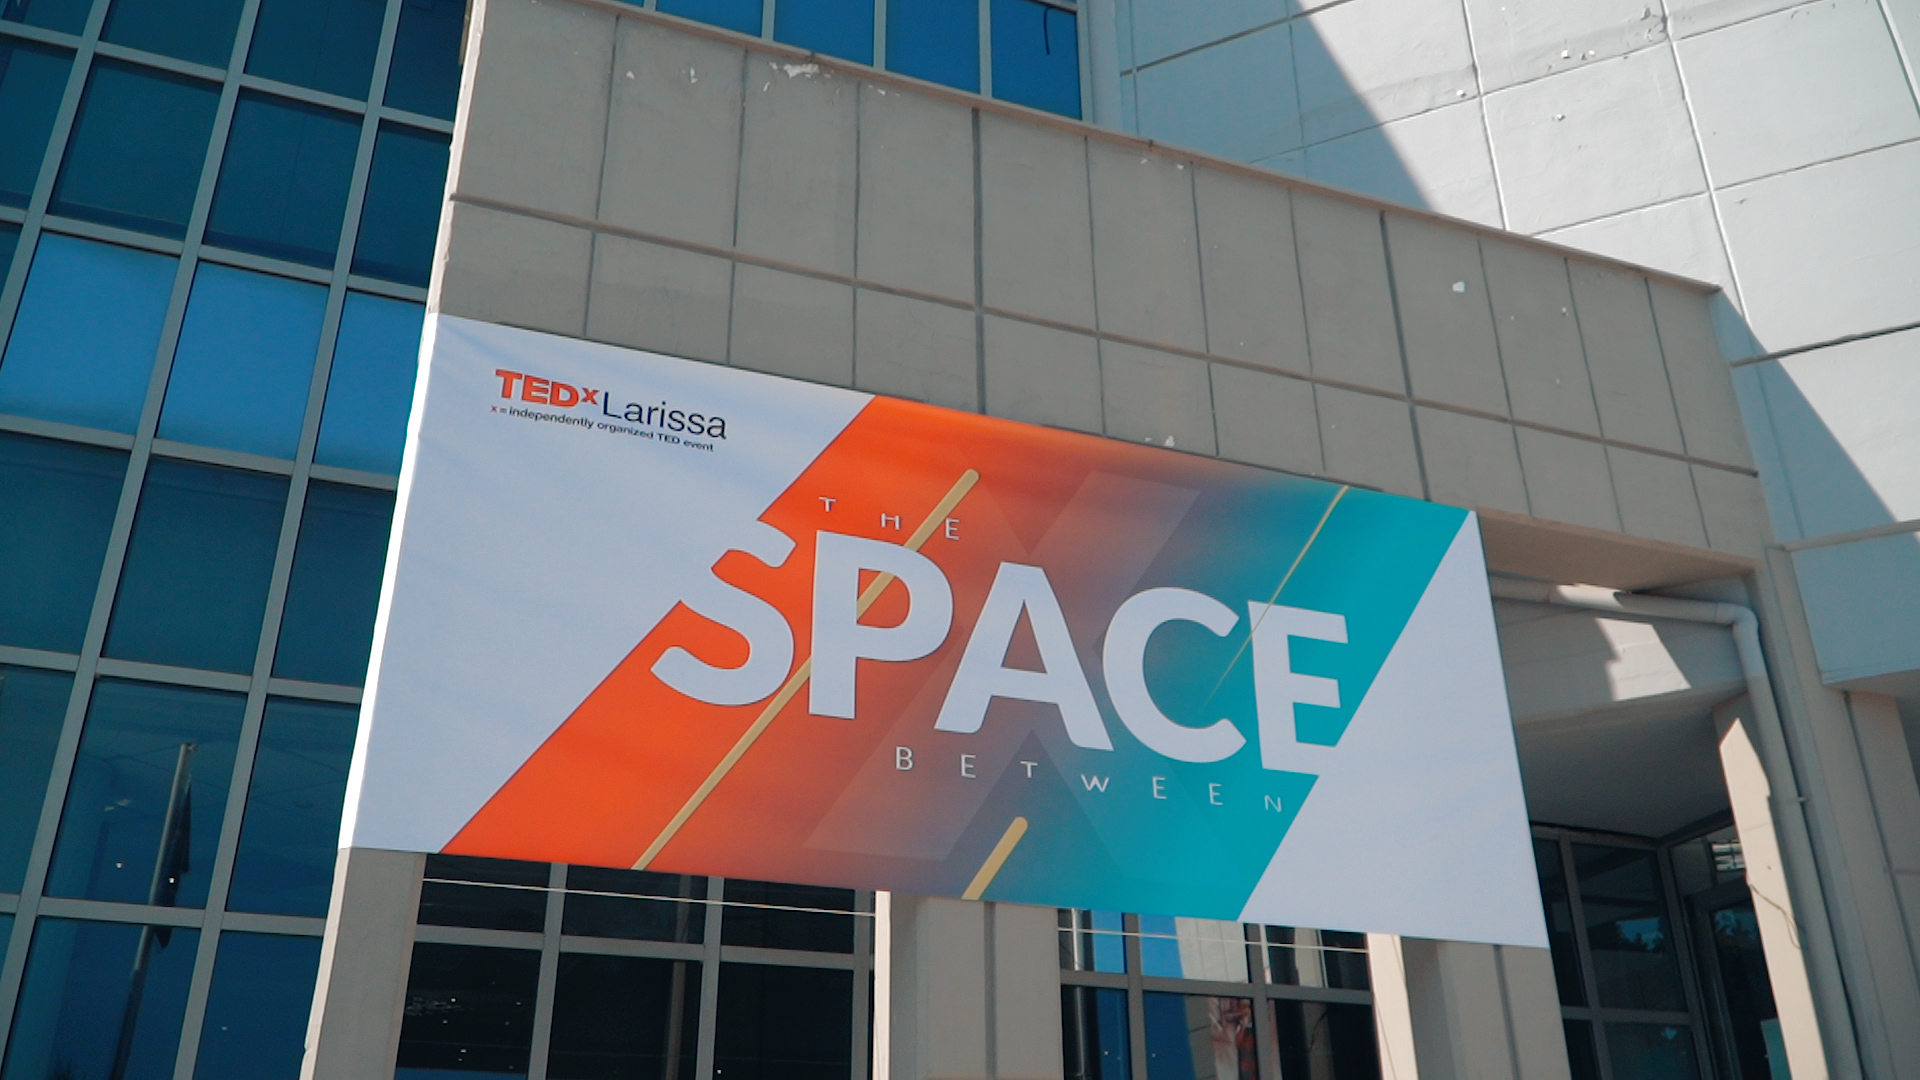 TEDxLarissa 2021